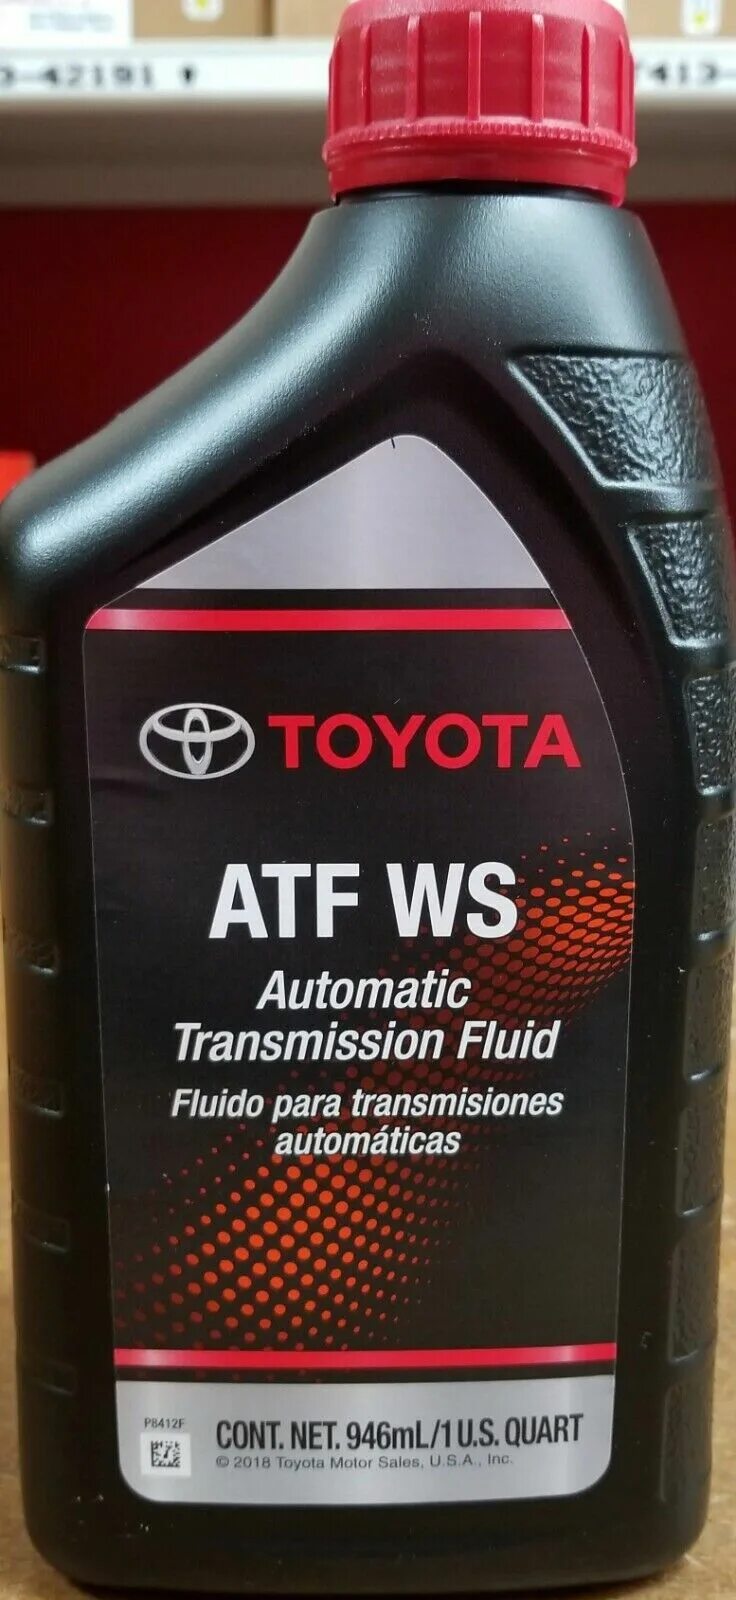 Акпп atf ws. Toyota Genuine ATF WS. At Fluid WS Toyota. Масло трансмиссионное WS. Genuine Toyota Automatic transmission Fluid-WS.